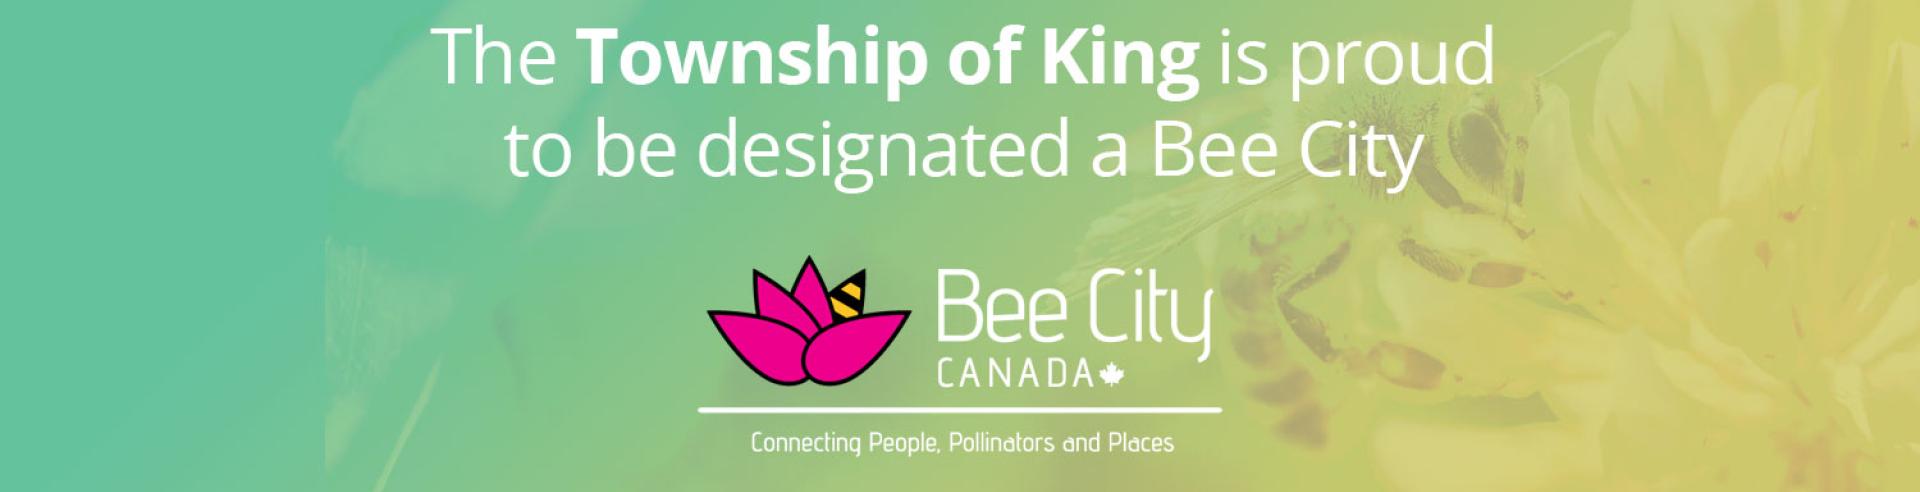 Bee City Certification